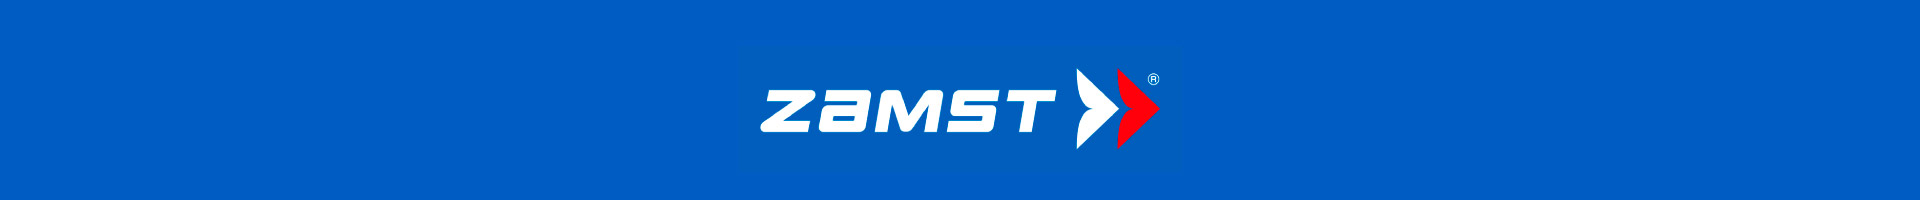 logotipo da marca Zamst